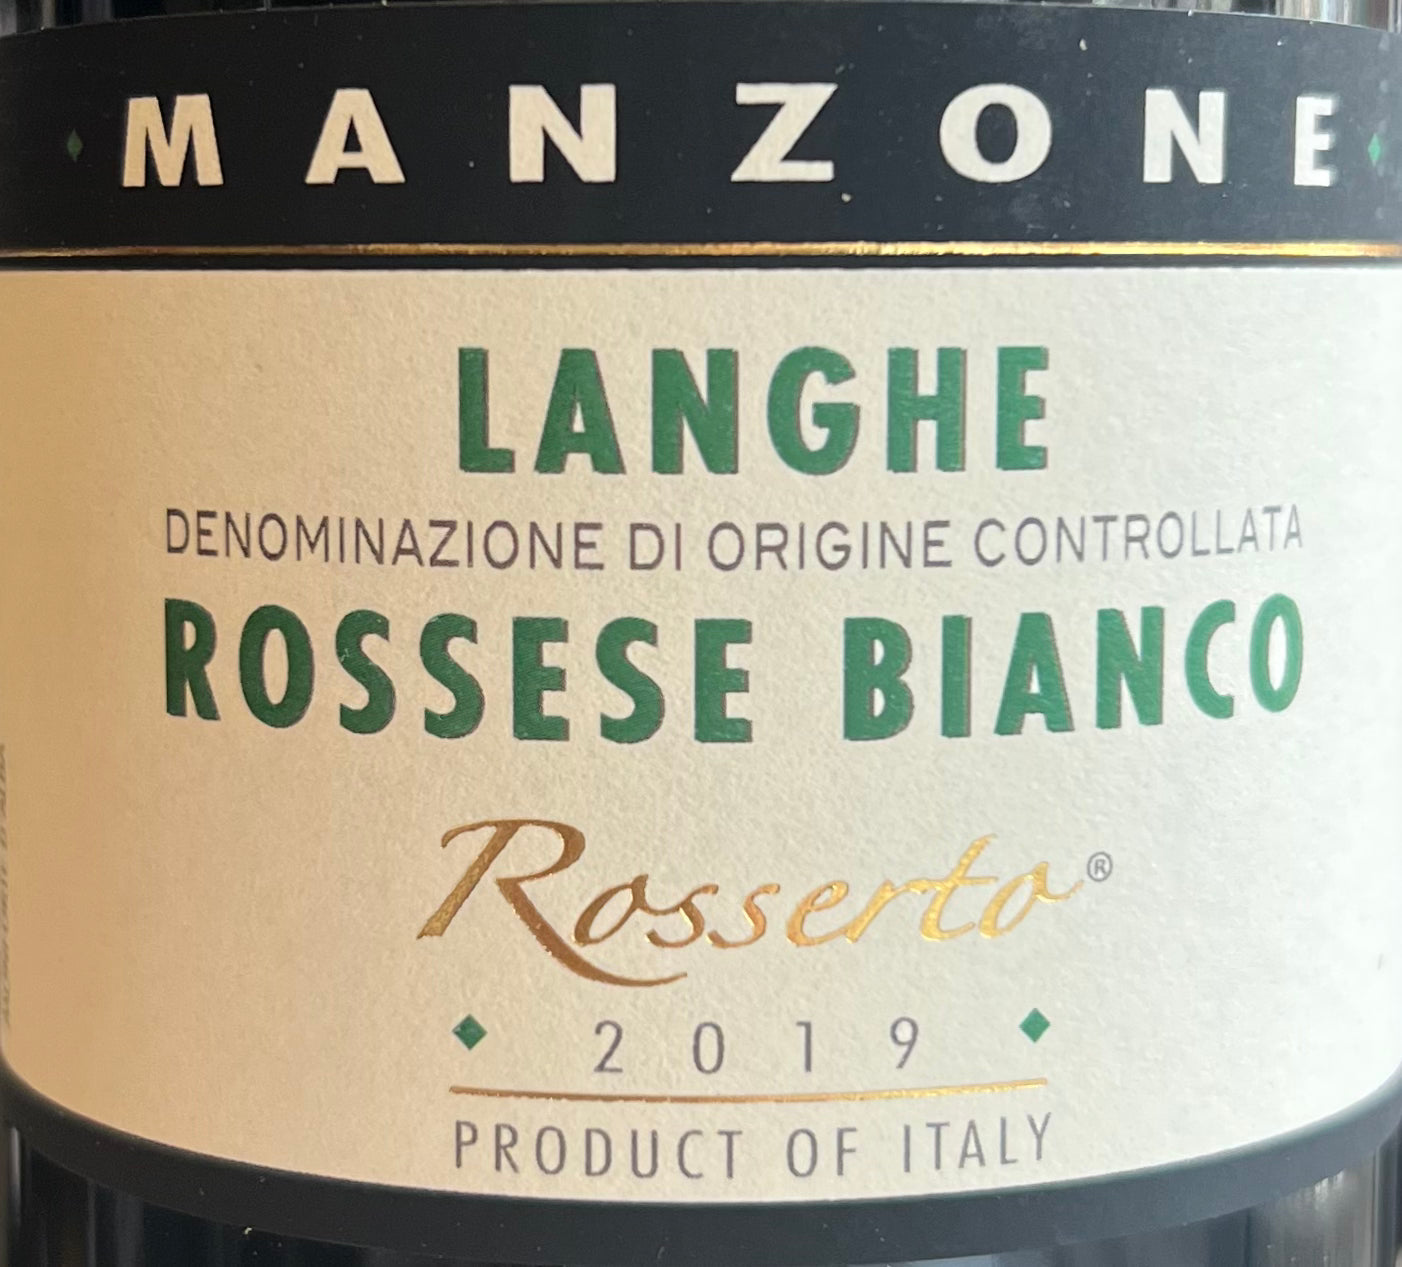 Manzone - Langhe Rossese Bianco Rosserto